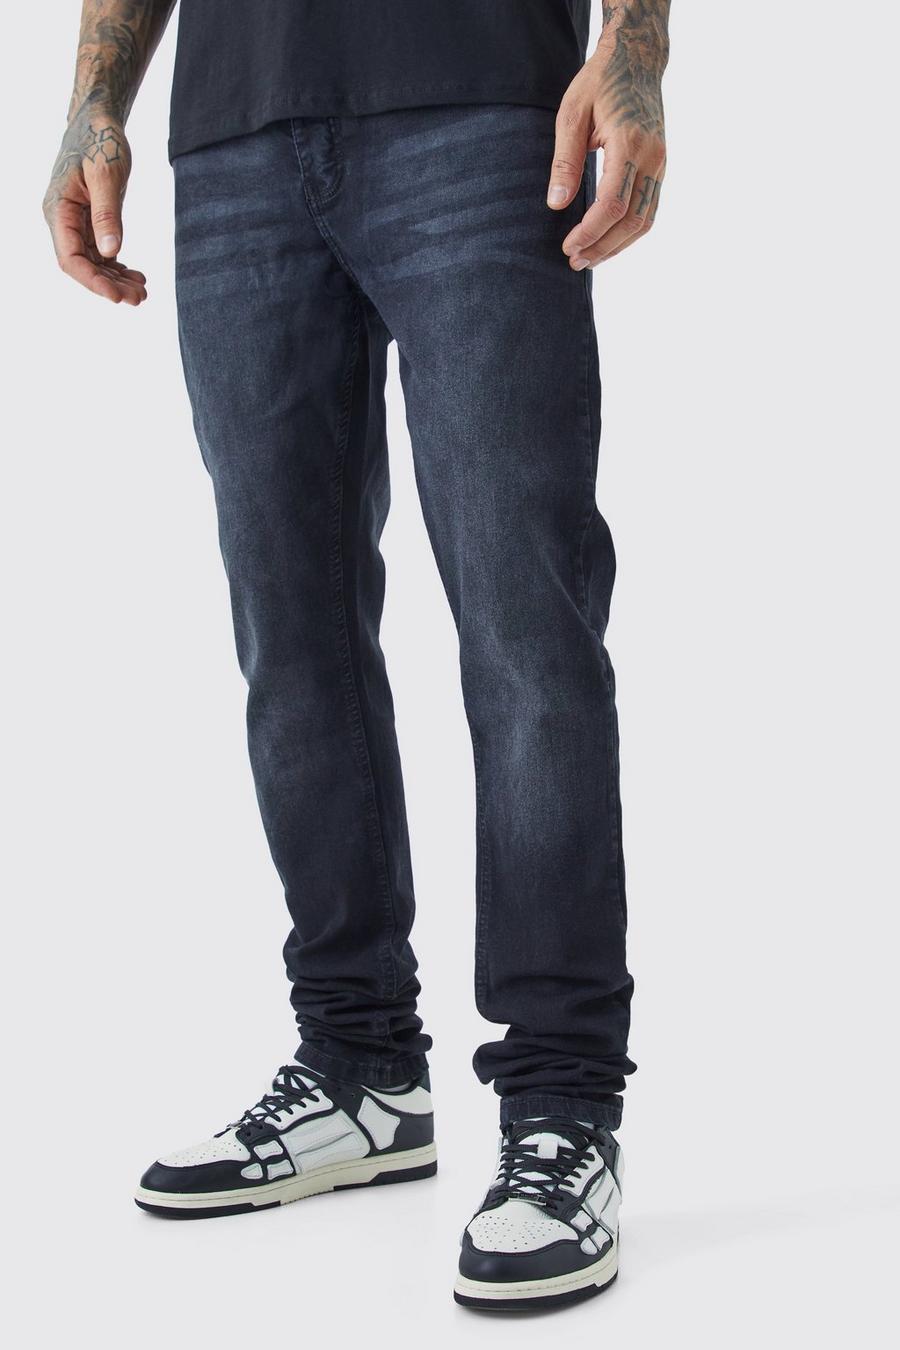 Jeans Tall Skinny Fit Stretch con pieghe sul fondo, Washed black